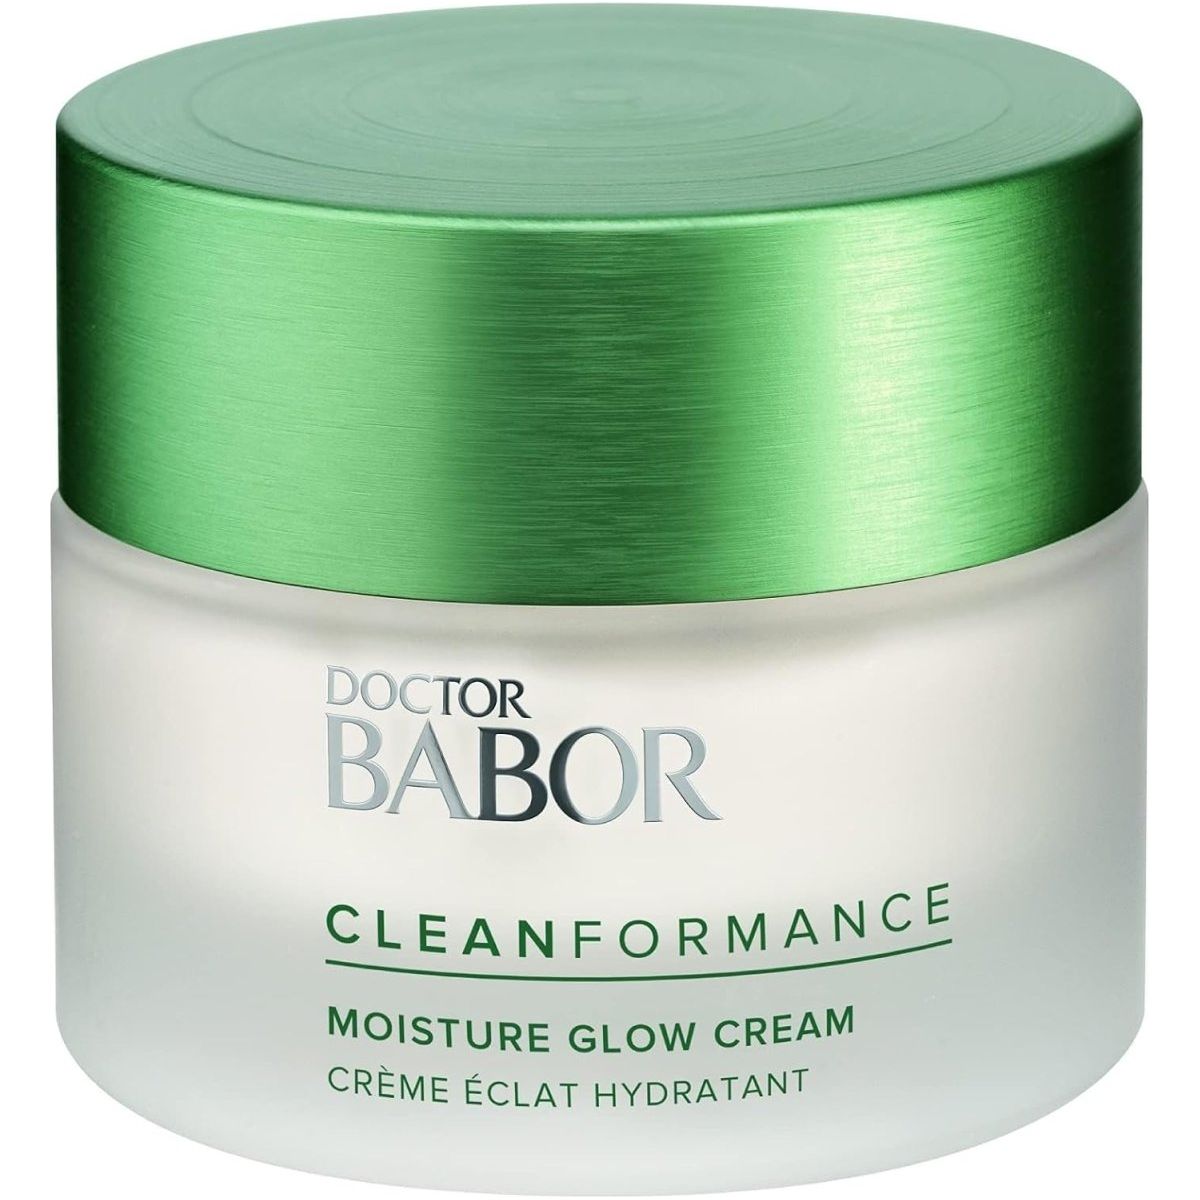 Doctor Babor Cleanformance: Moisture Glow Cream 50ml - DG International Ventures Limited